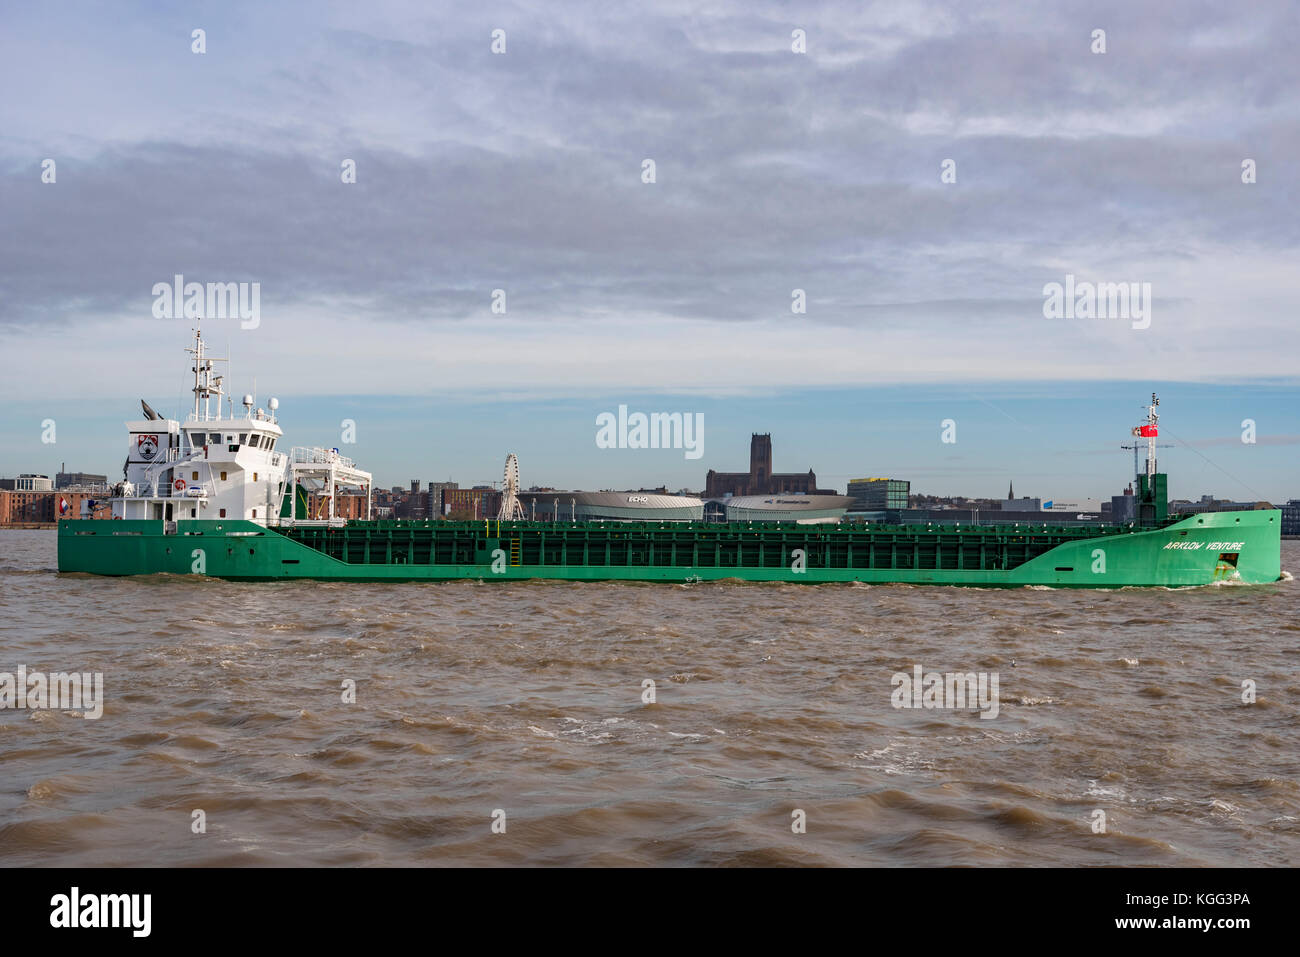 Oil tanker Arklow Venture in the river Mersey. Stock Photo